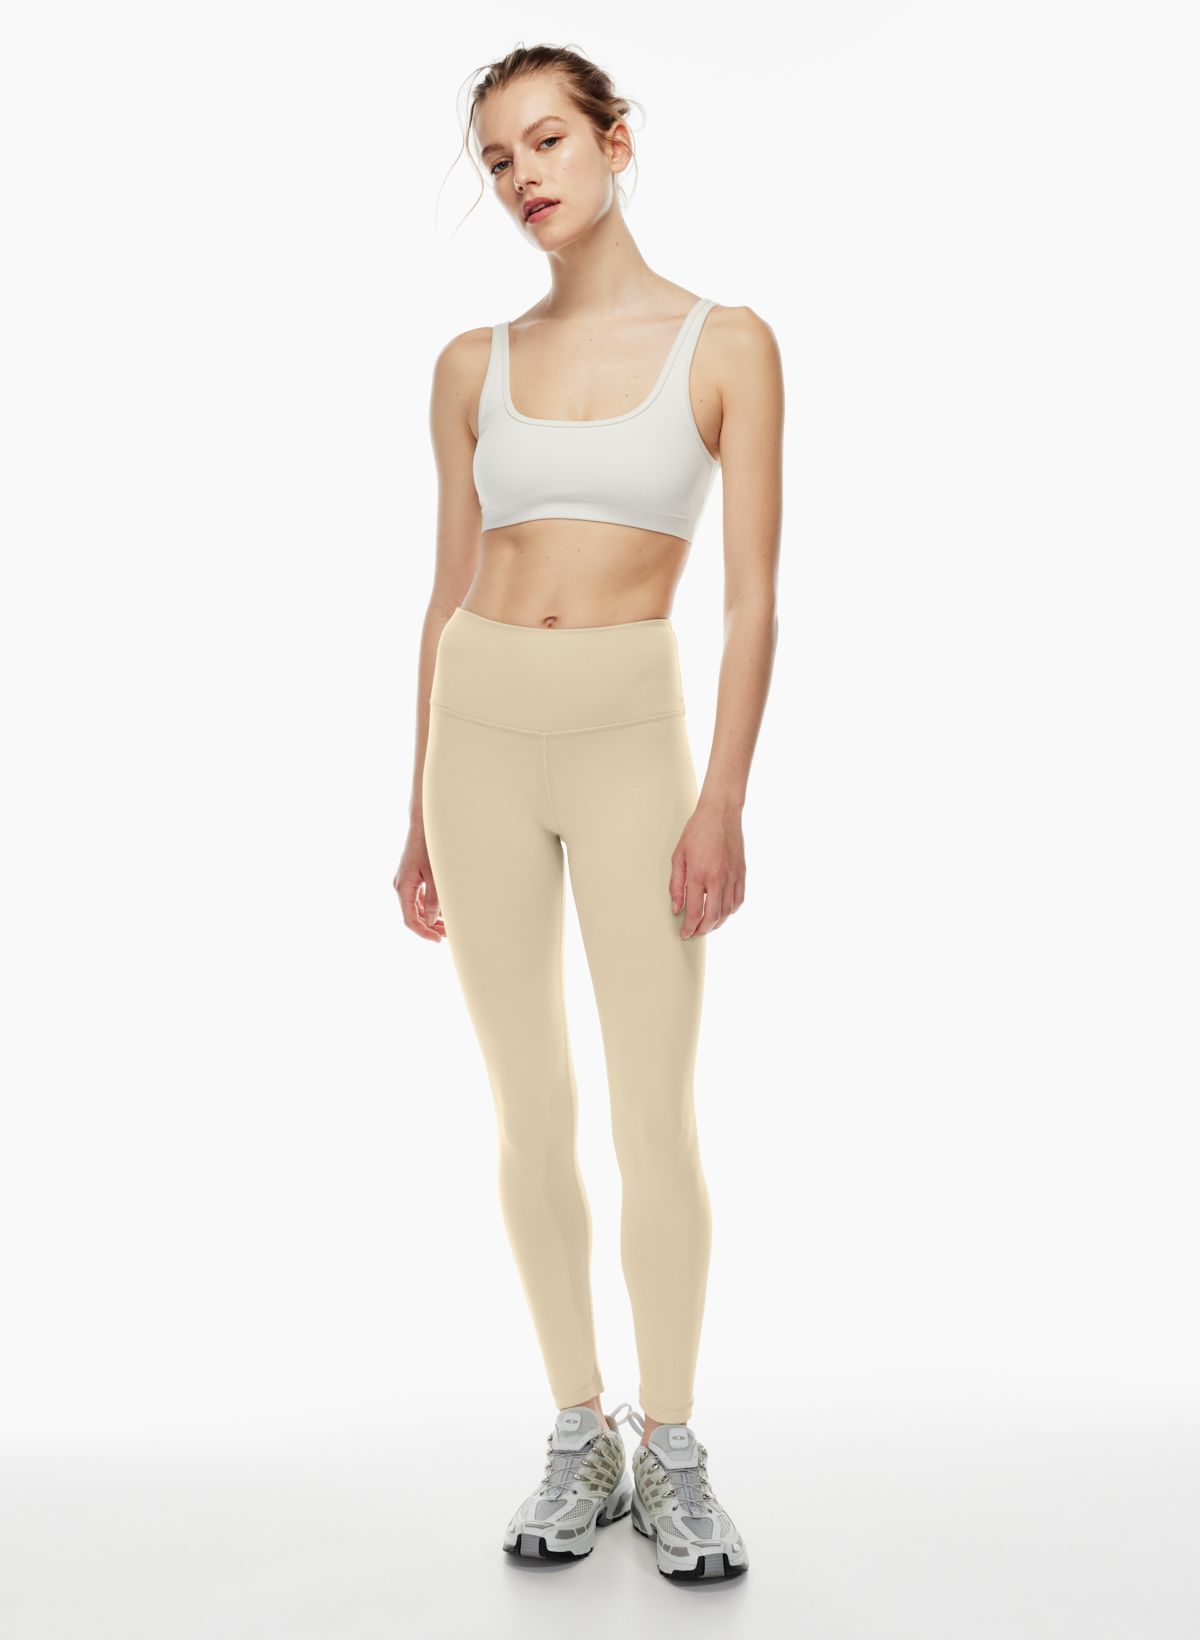 12 STOREEZ High-waist Seamless leggings in White